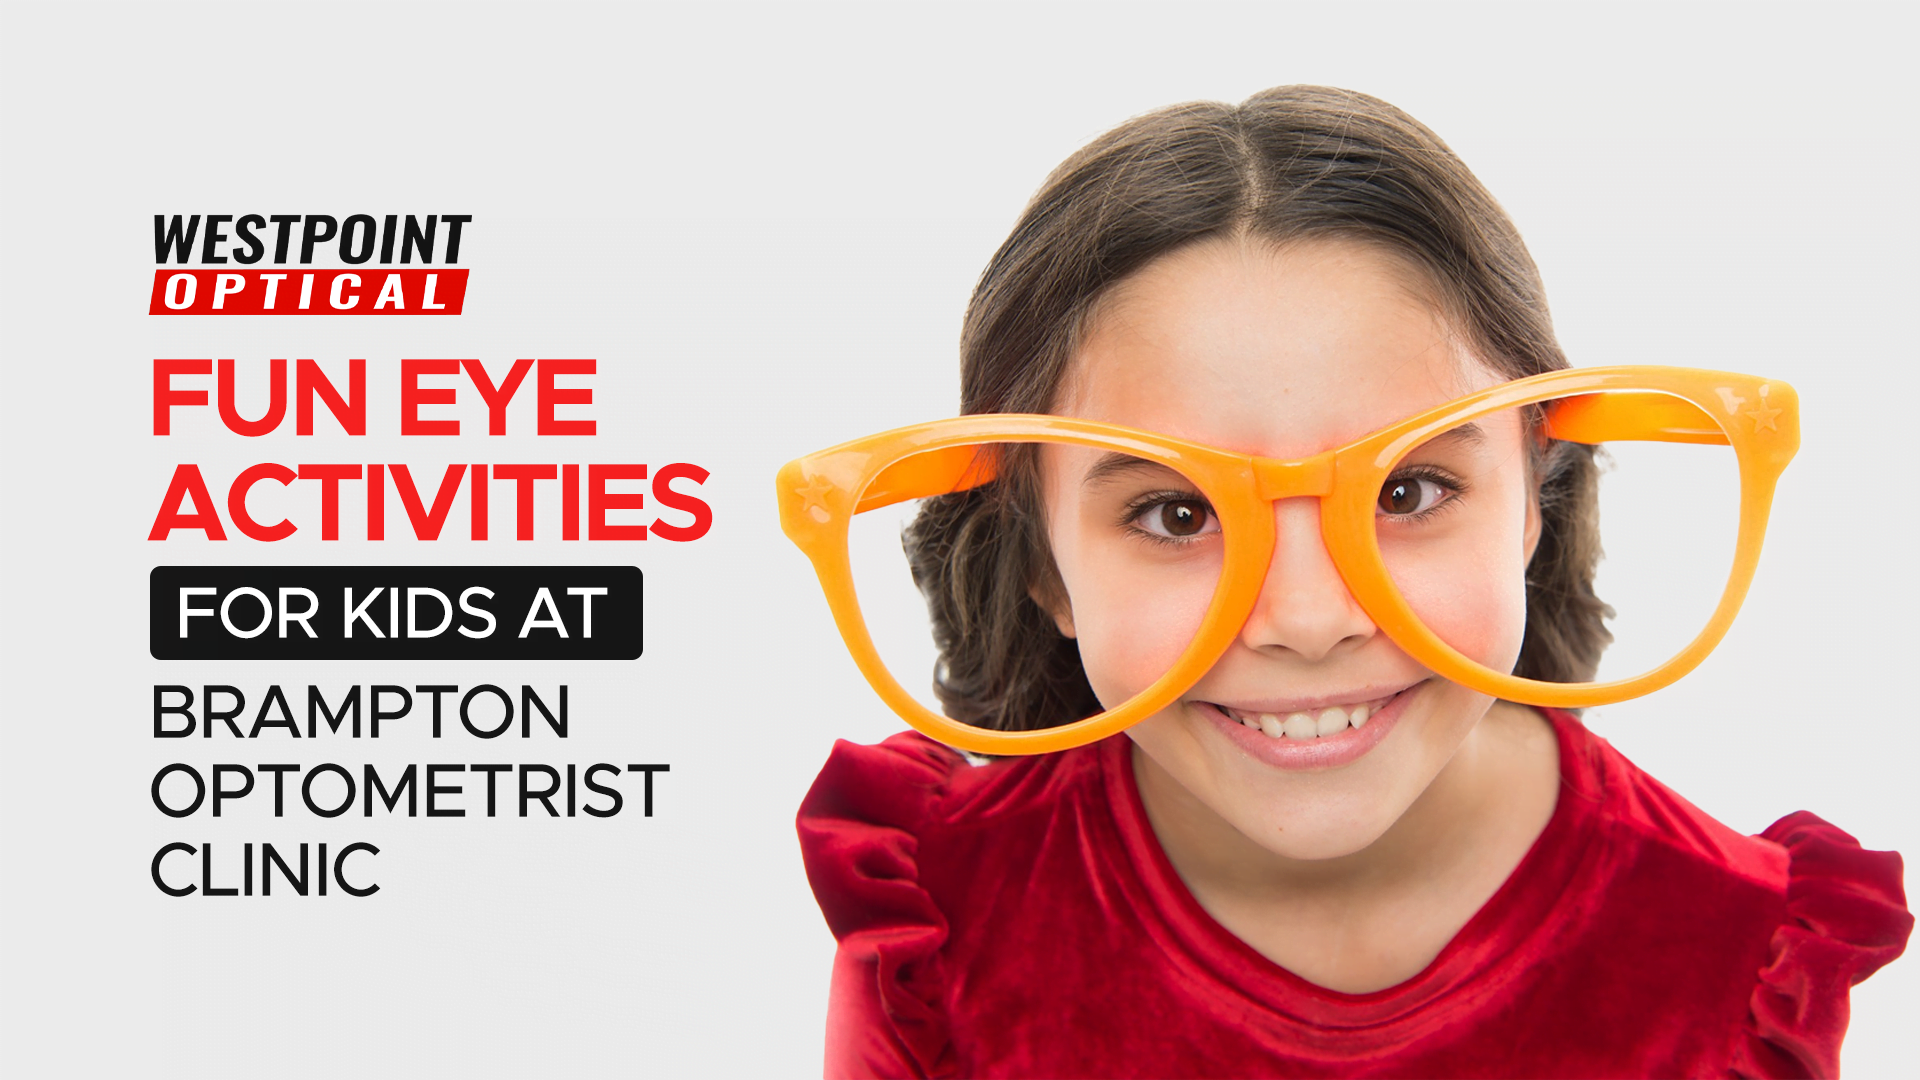 Fun Eye Activities for Kids at Brampton Optometrist Clinic-Westpoint ptical